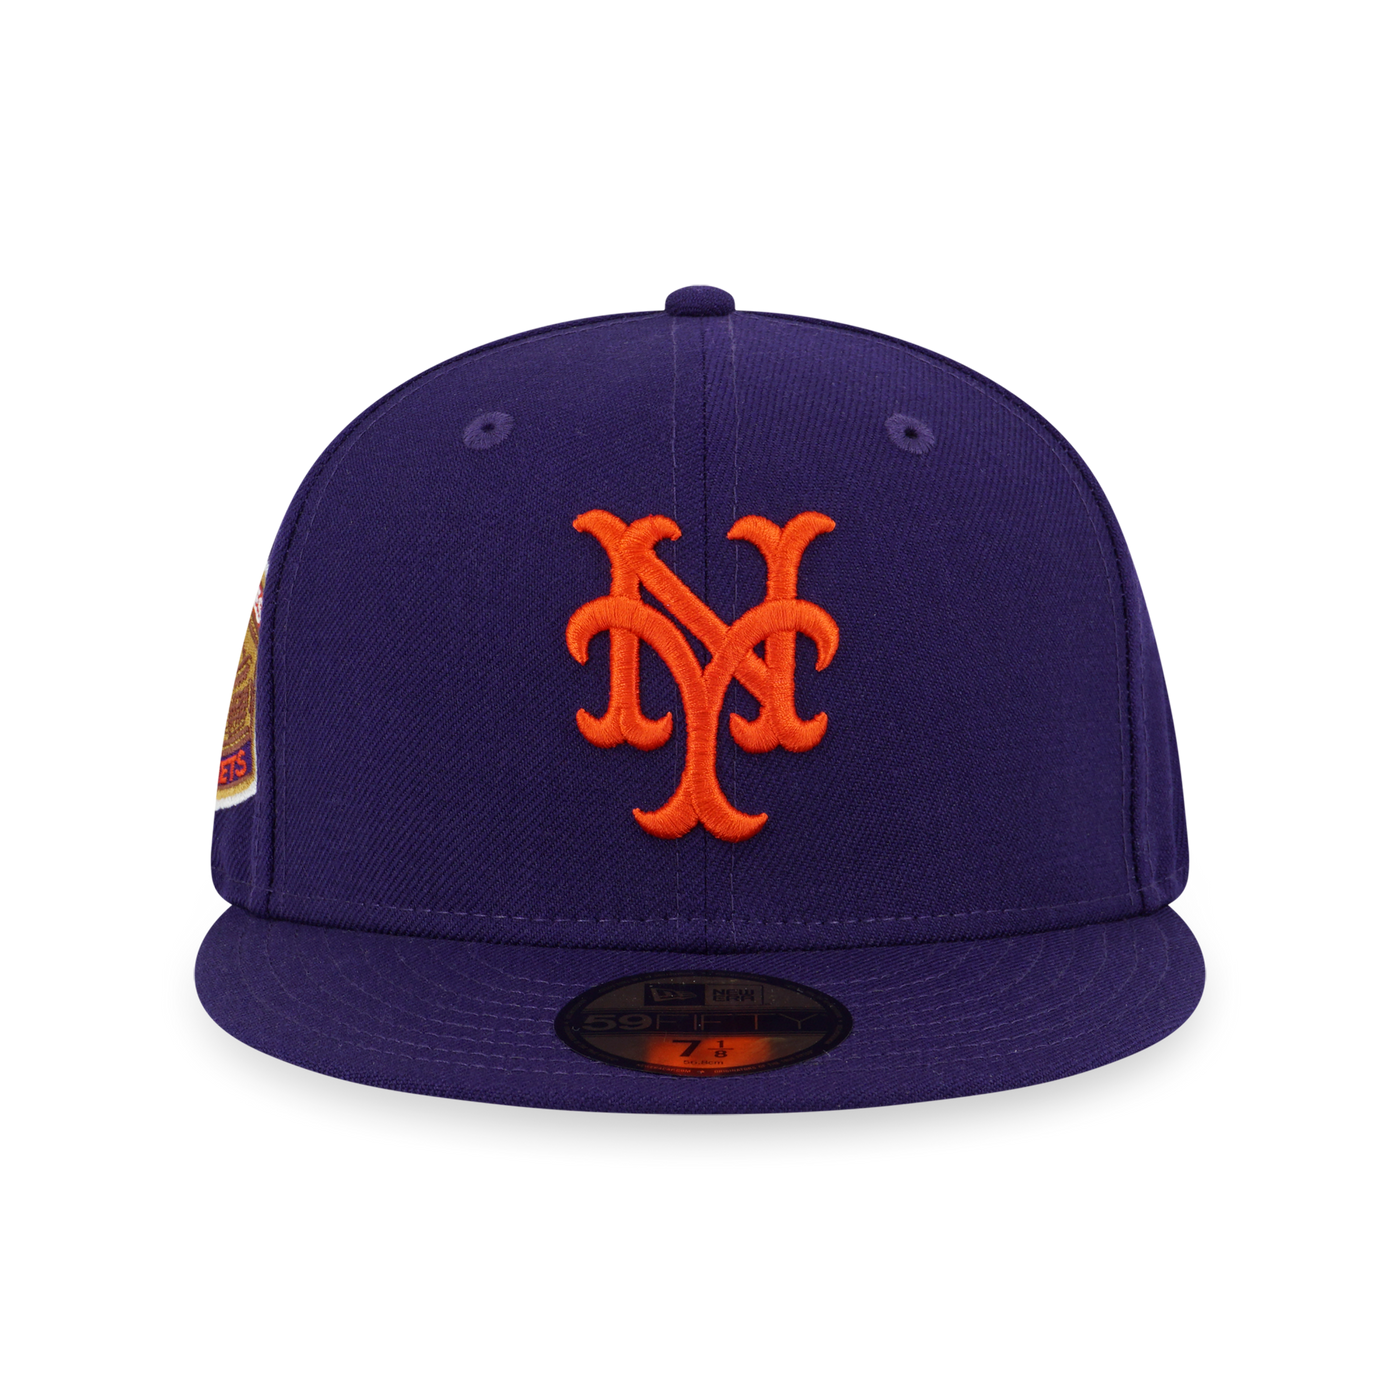 NEW YORK METS COOPERSTOWN ROYAL PURPLE 59FIFTY CAP